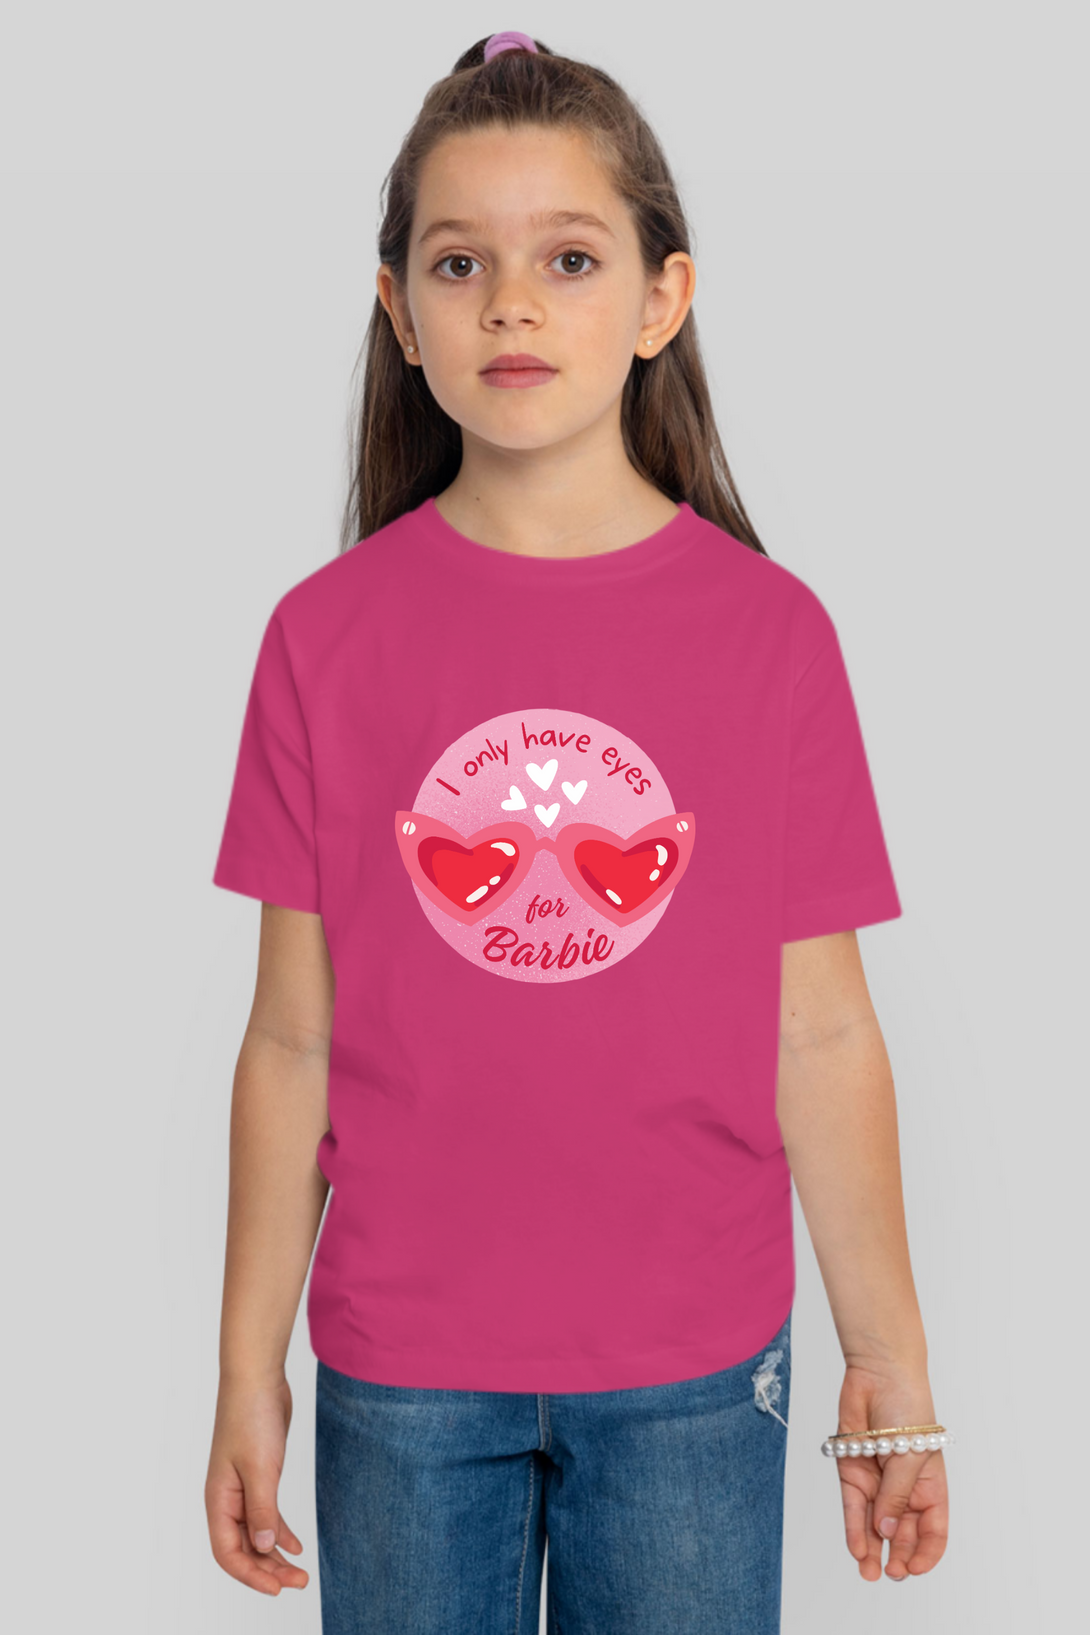 Barbie Gaze Printed T-Shirt For Girl - WowWaves - 7